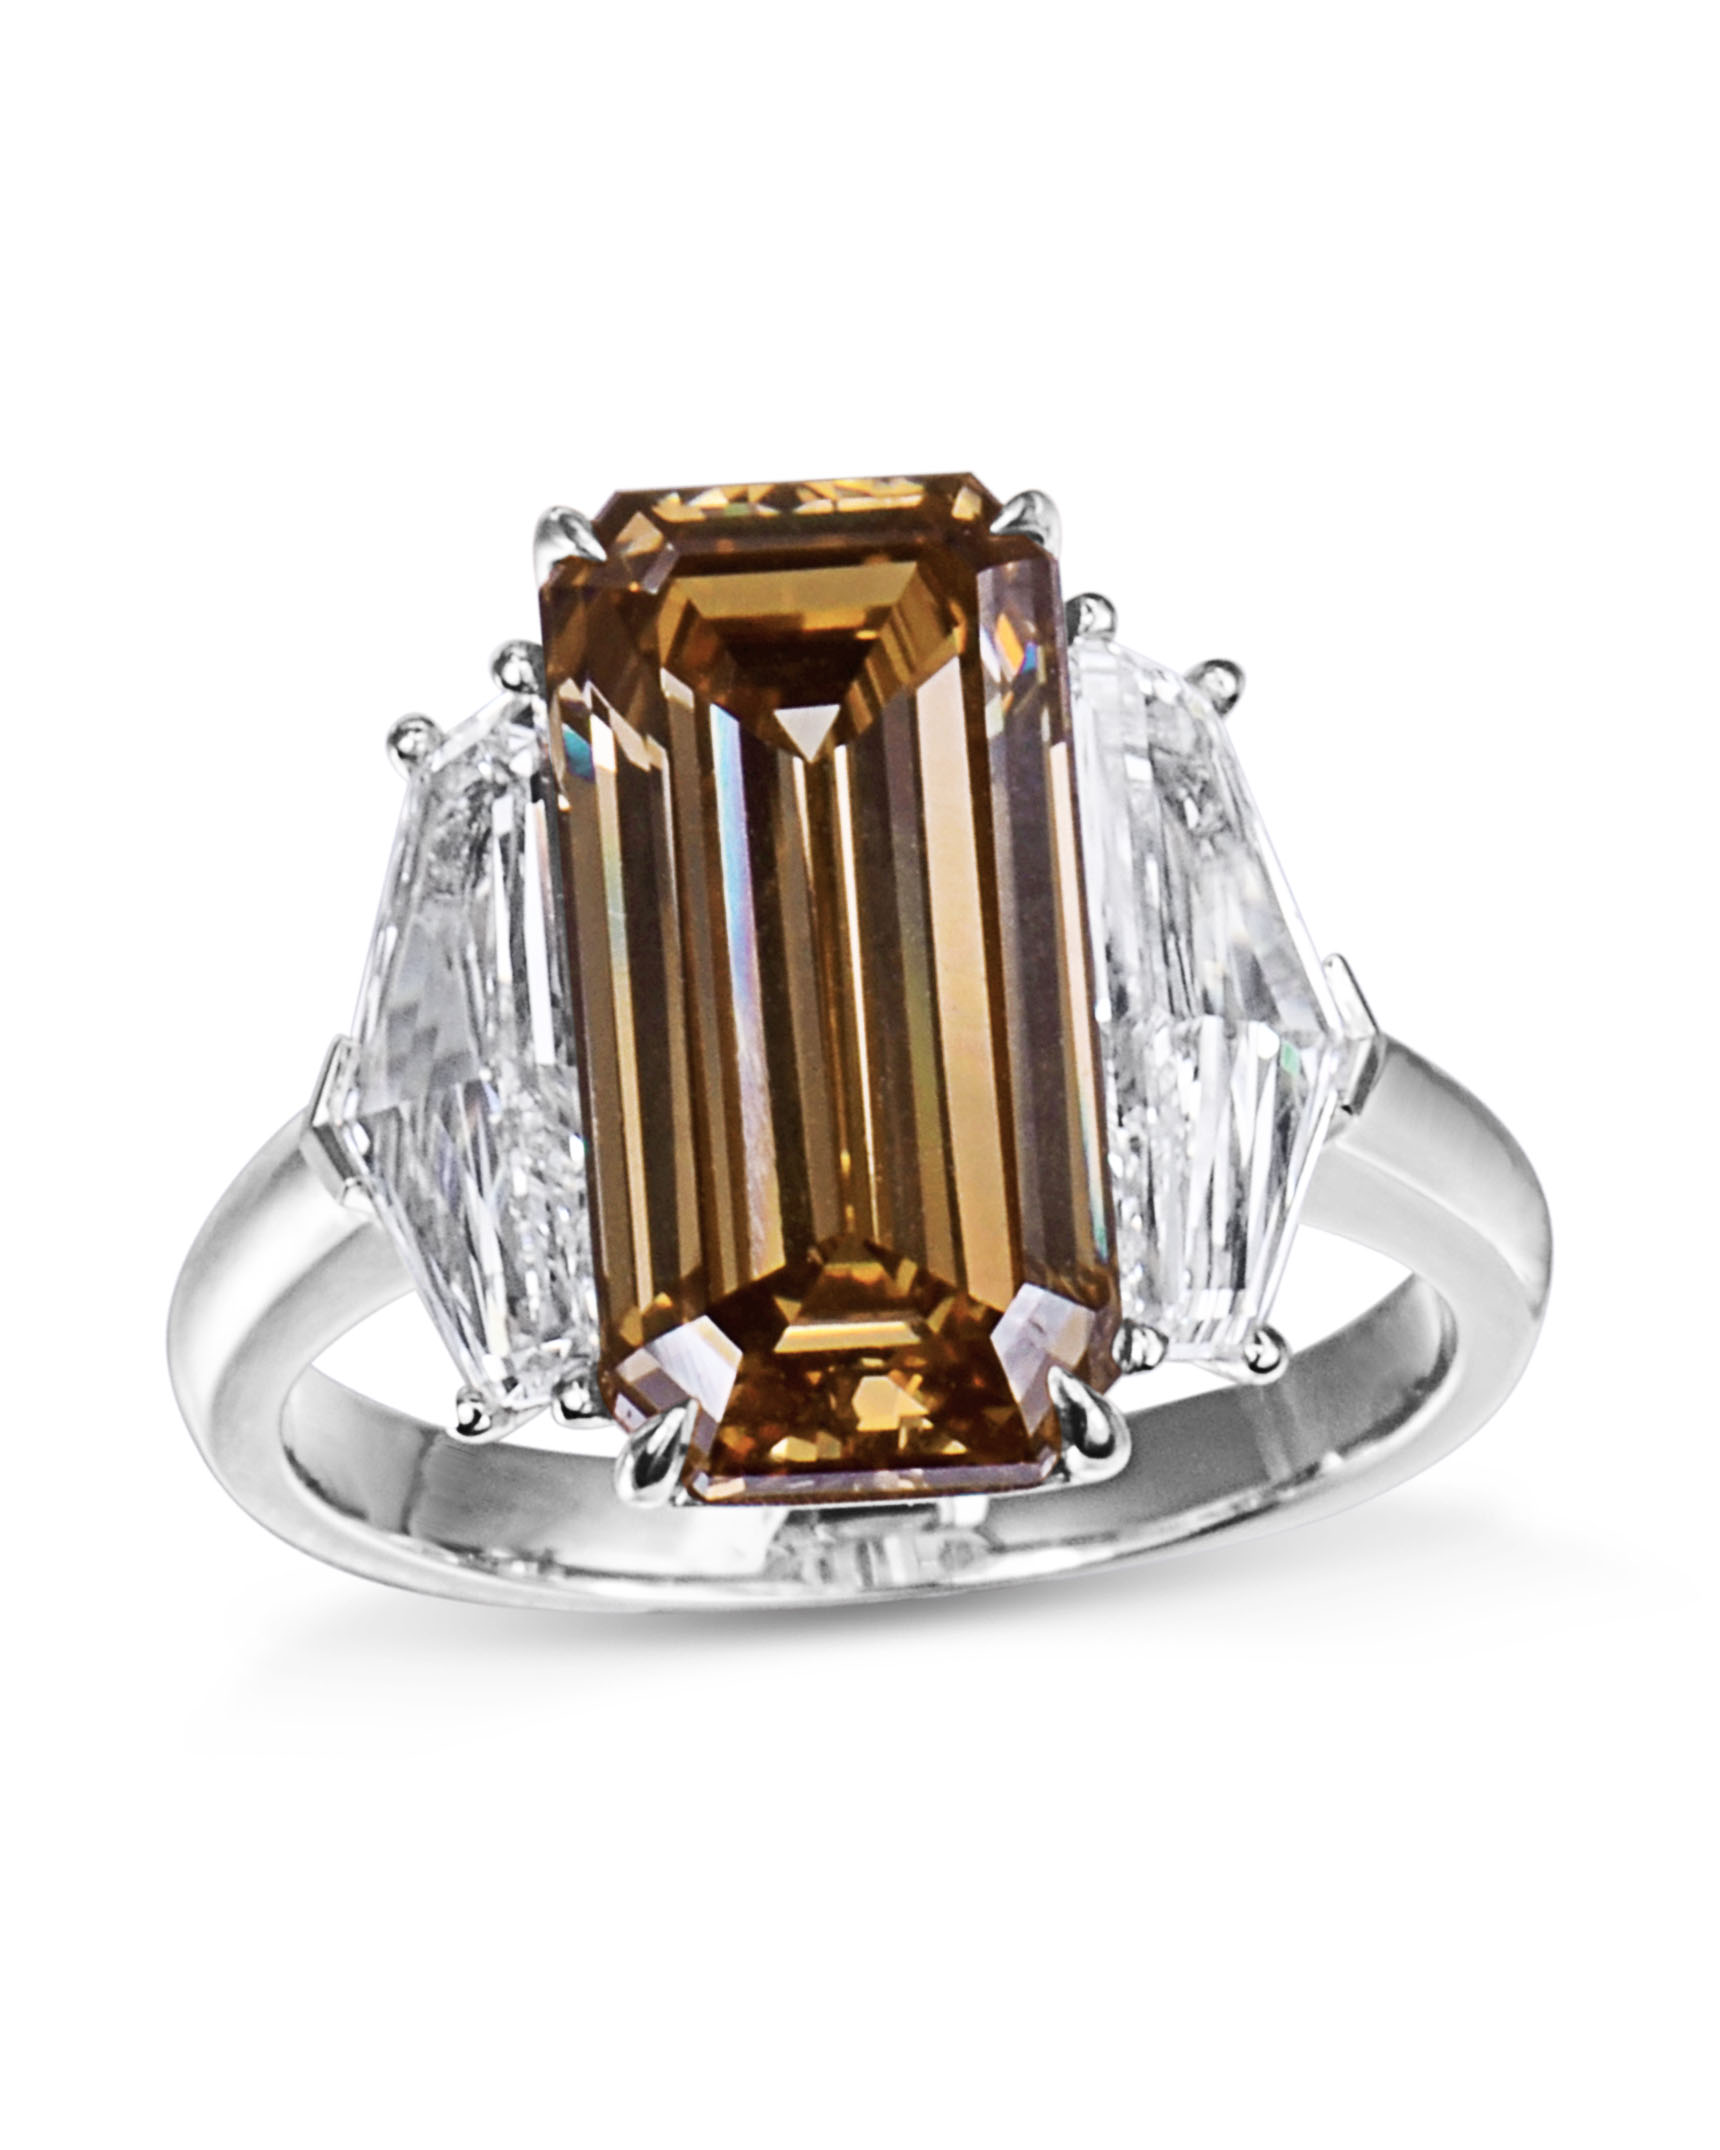 Big Emerald Cut Diamond Engagement Ring - 11 ctw